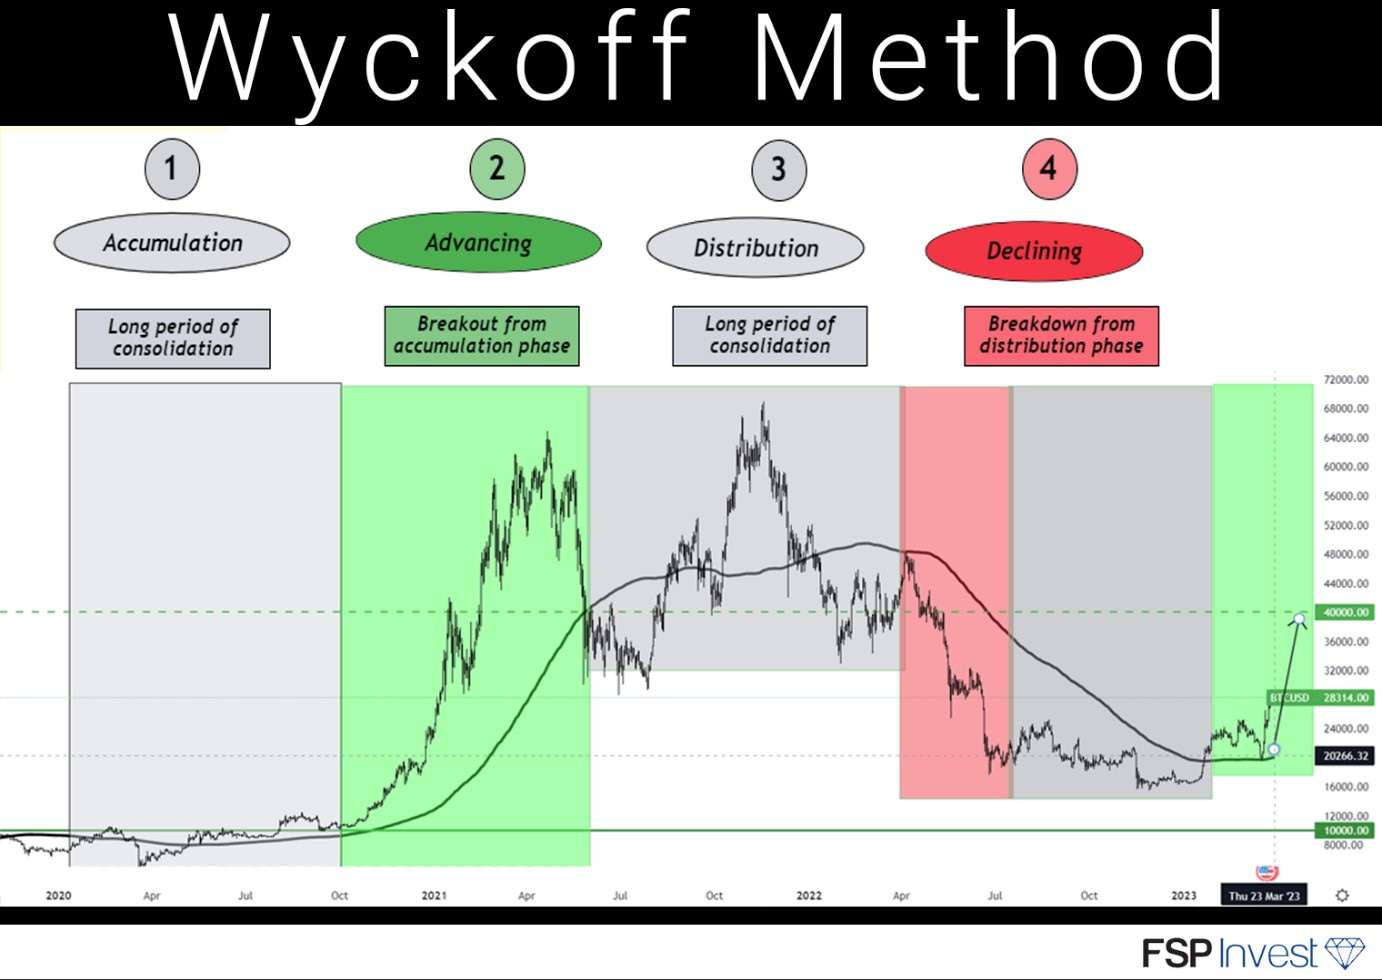 Wyckoff's method